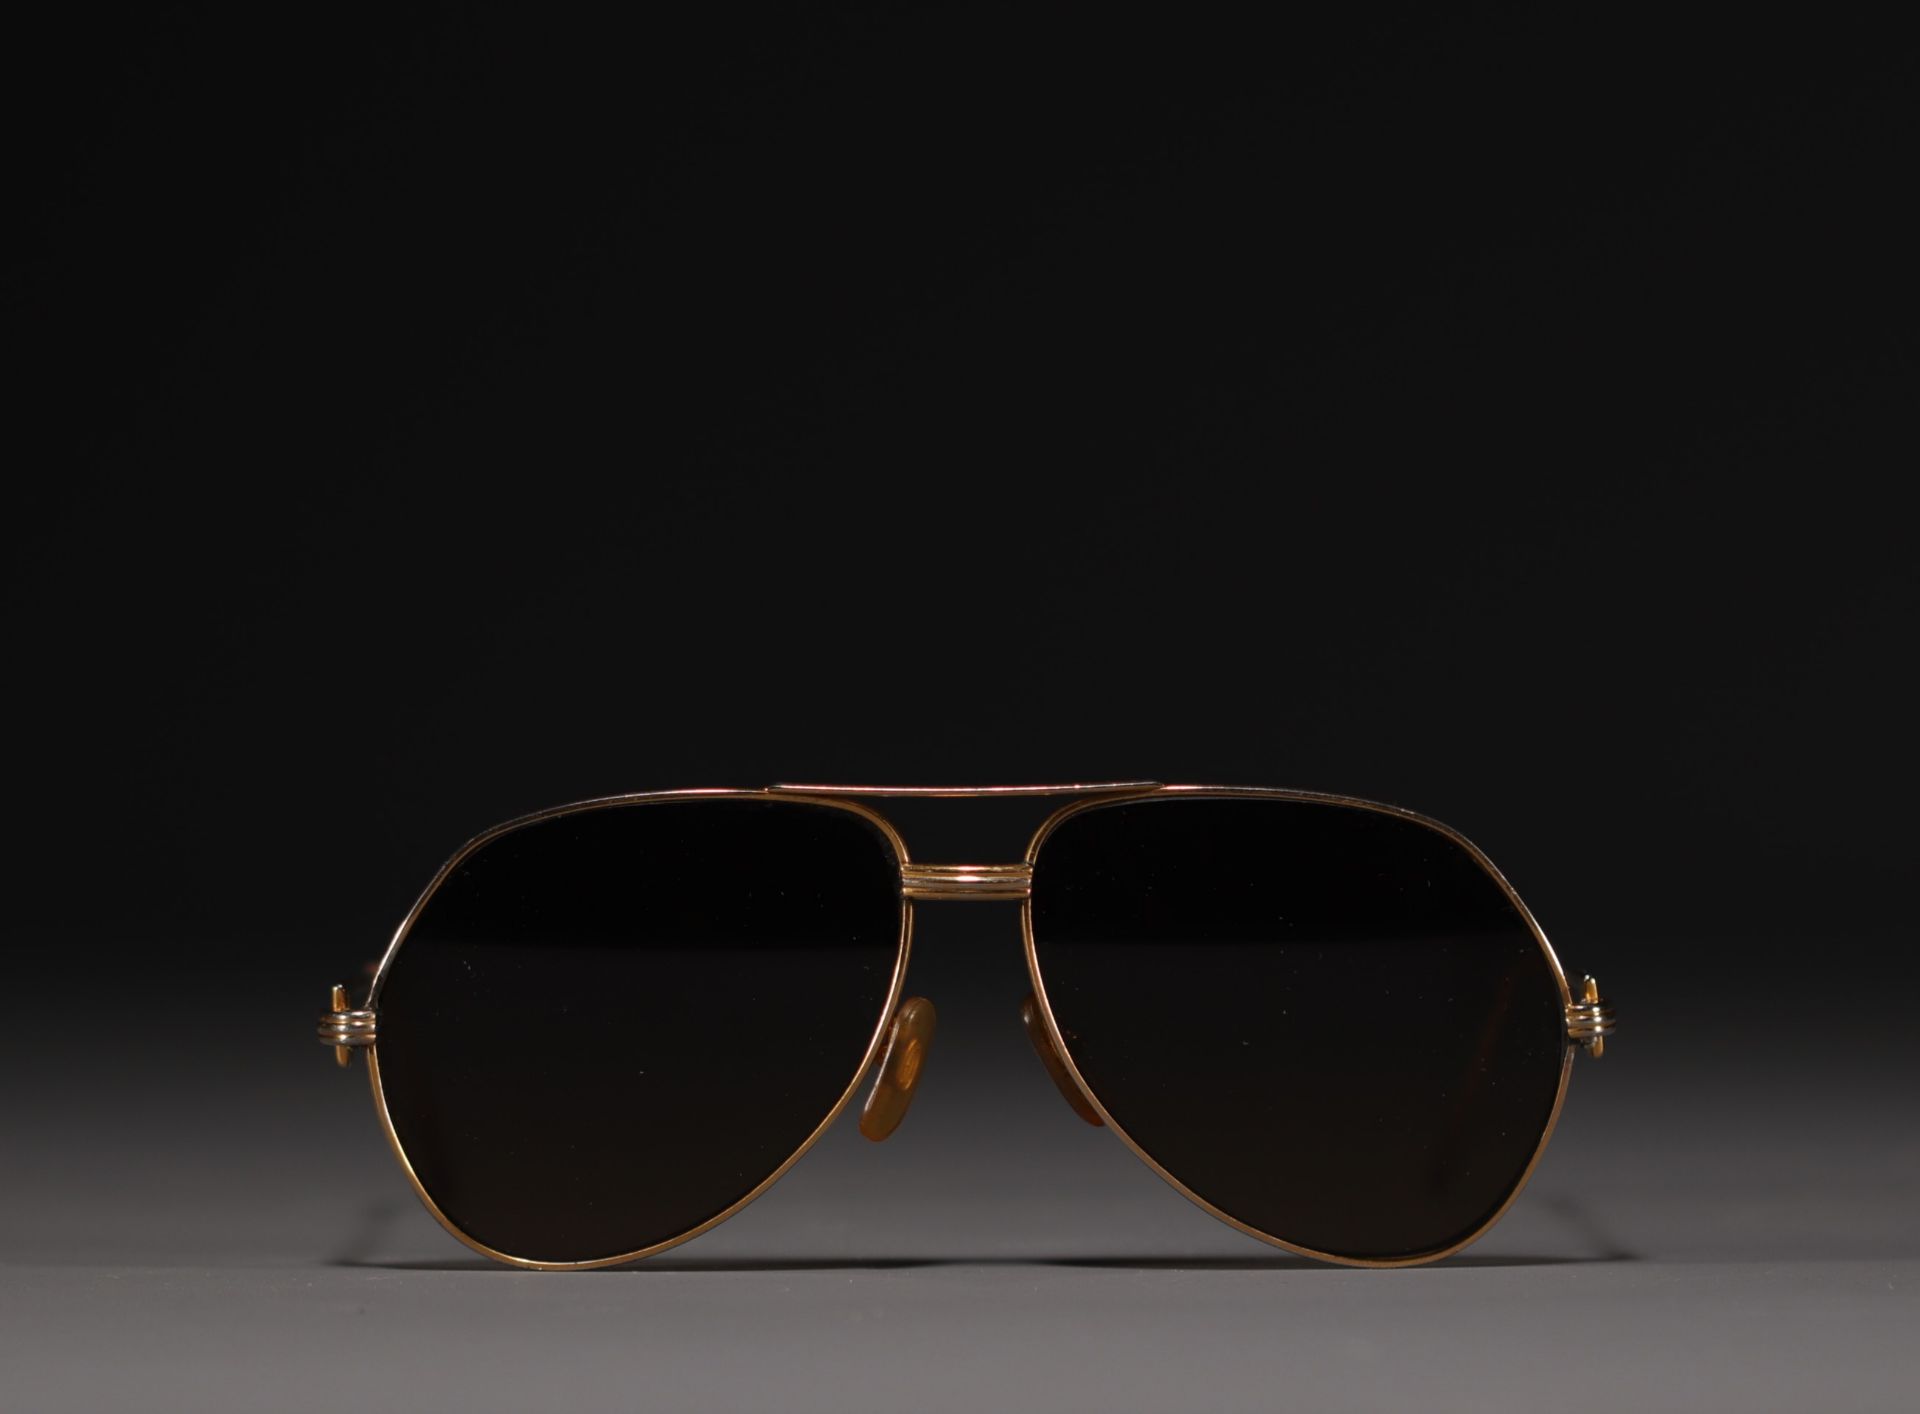 Cartier - "Must" Pair of vintage sunglasses.